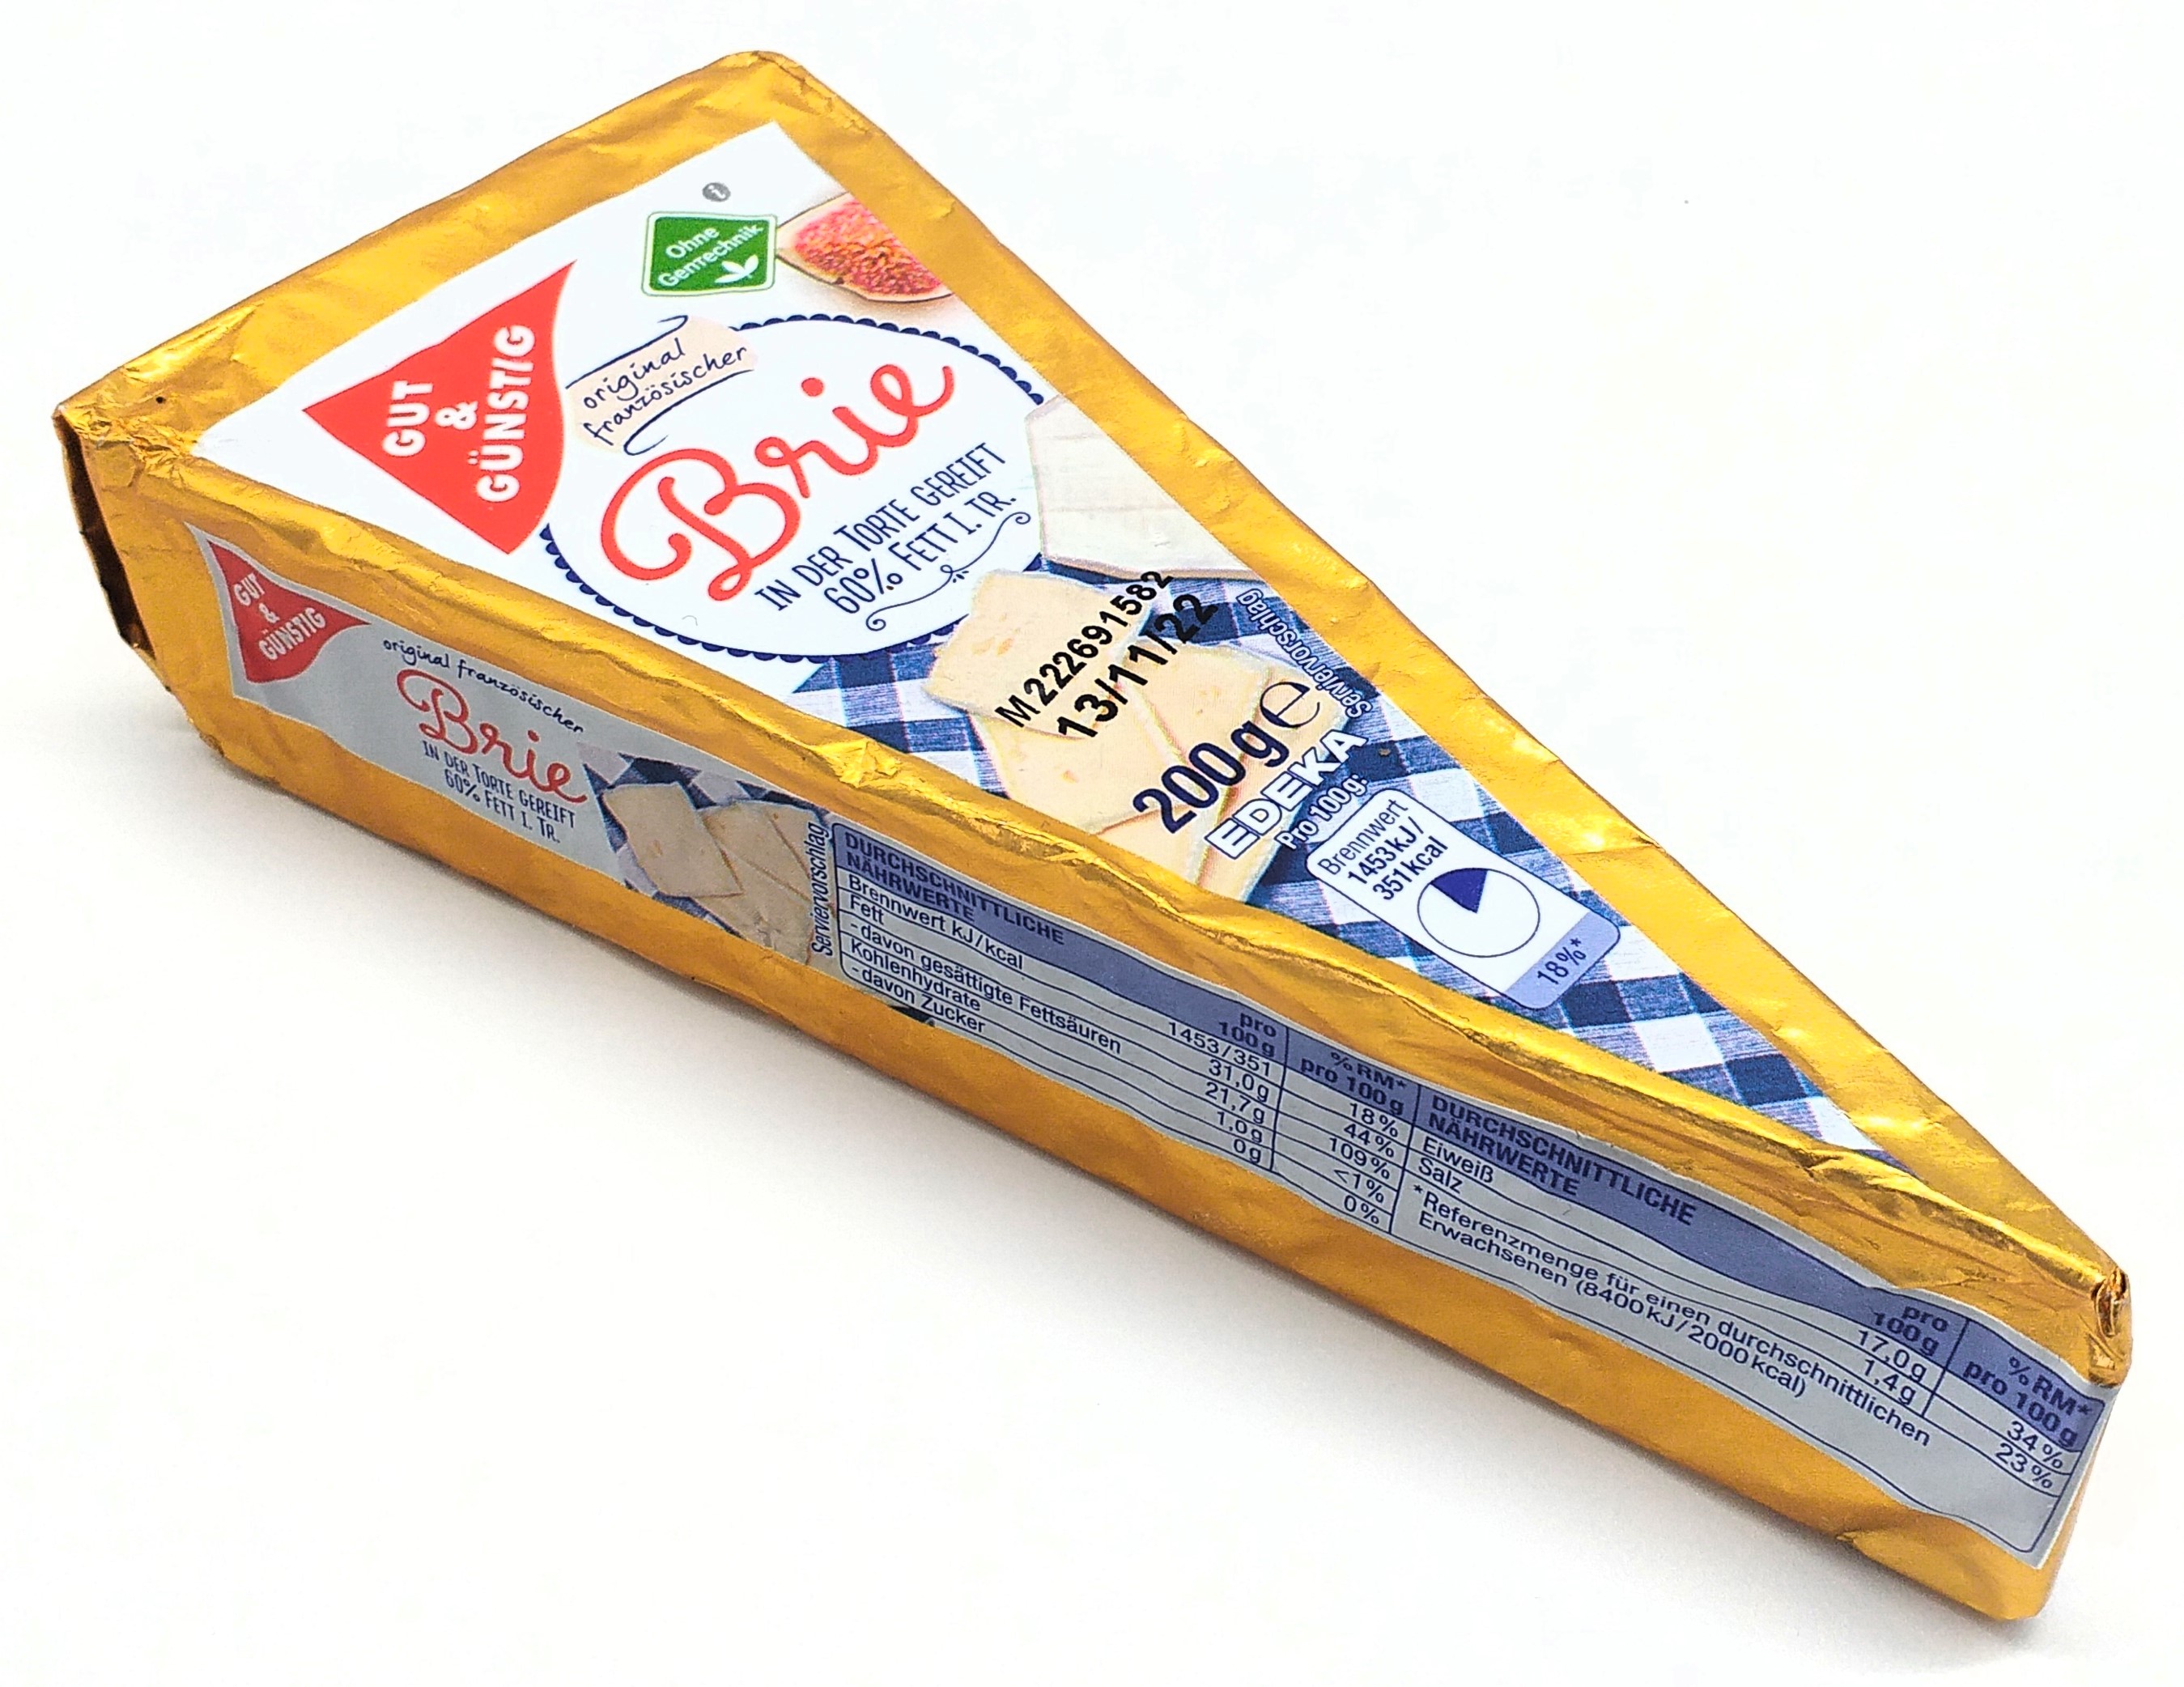 G&G Französicher Brie 60%  Fett i. Tr. 200g